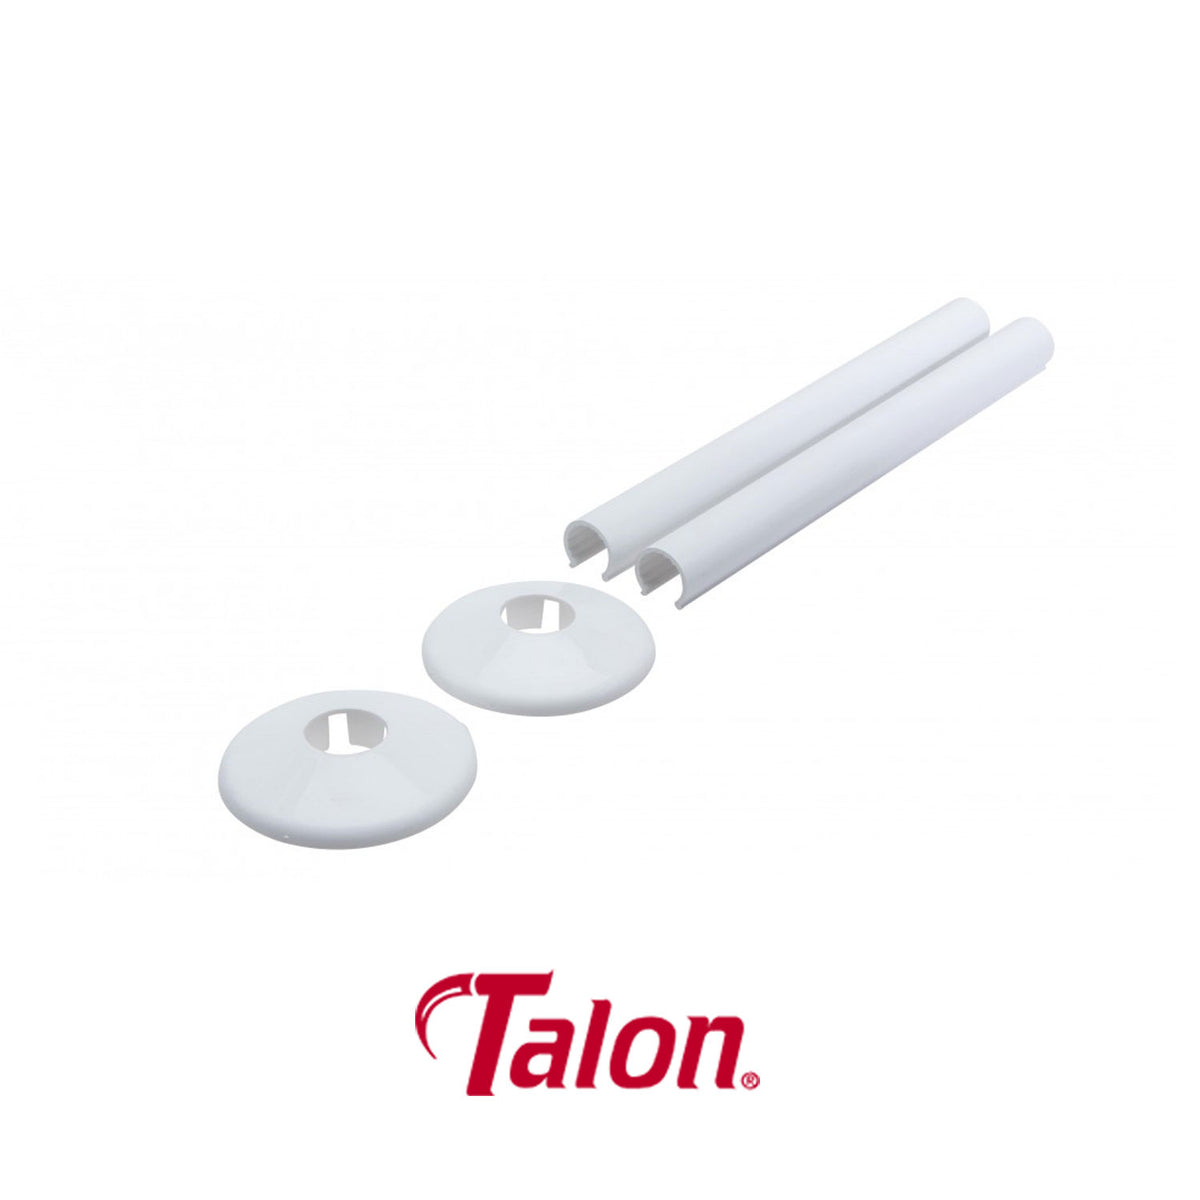 Talon Snappit Towel Rail Radiator Pipe Covers White